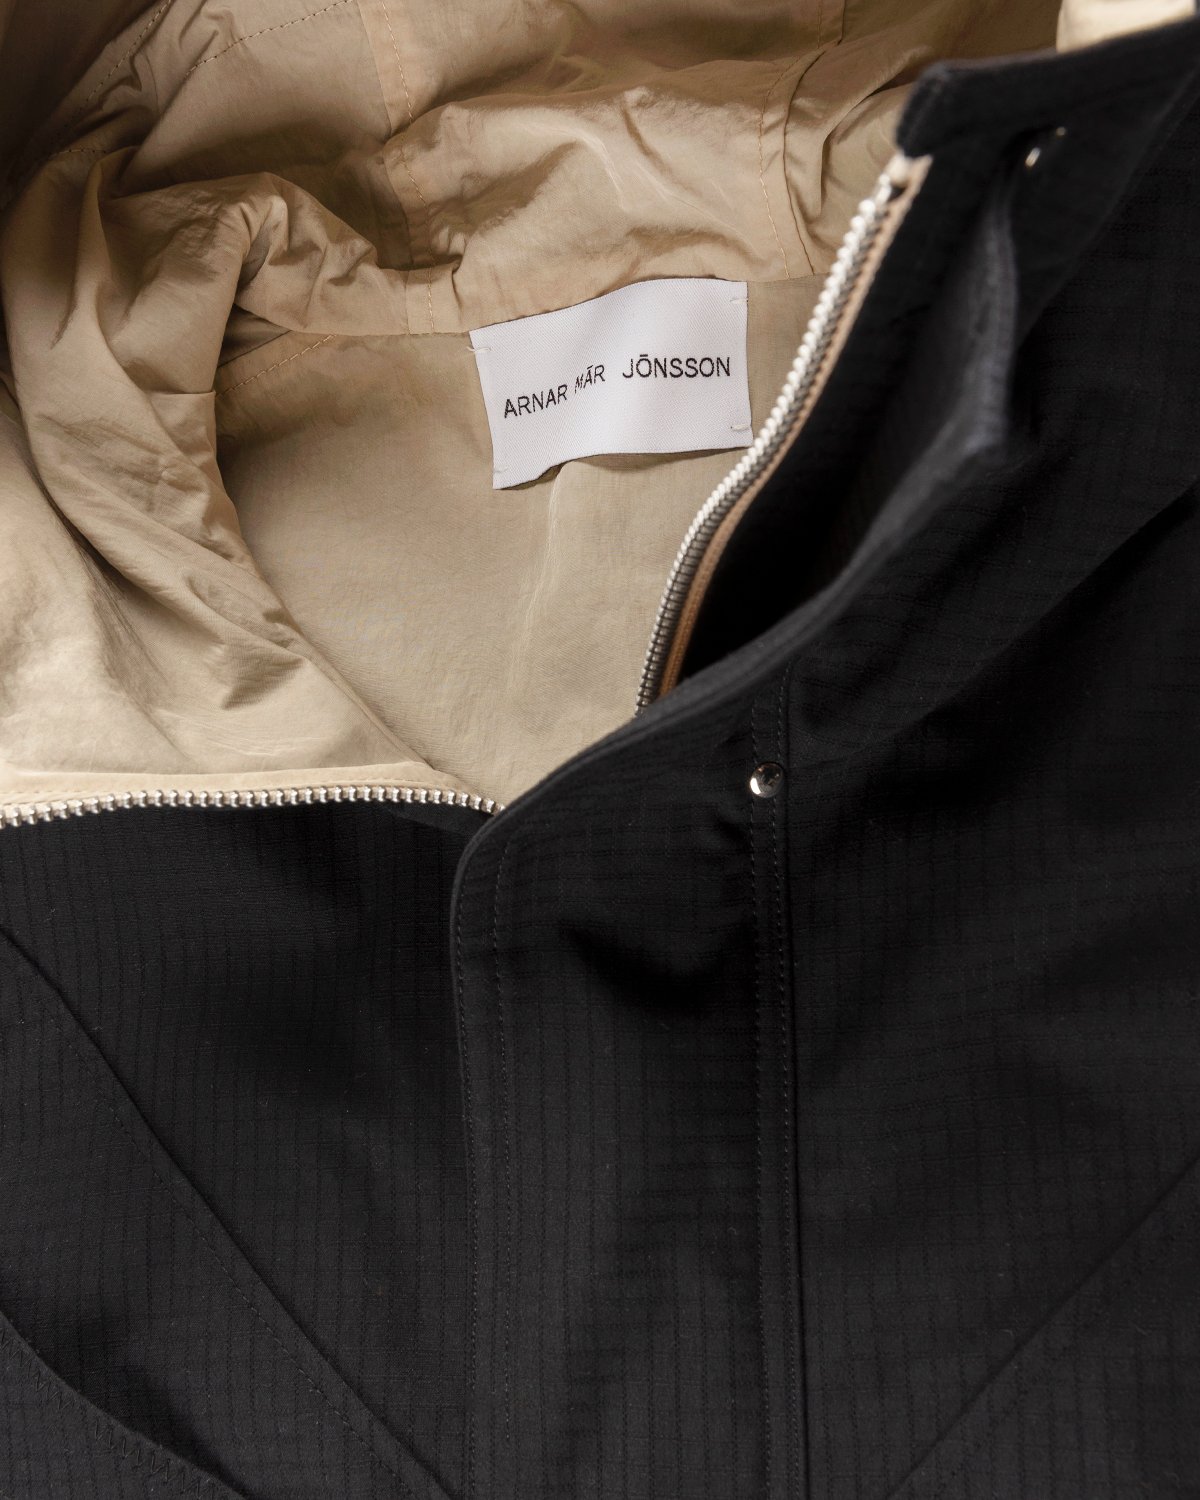 Arnar Mar Jonsson - Ventile Cross Pocket Outerwear Jacket Lava Beige - Clothing - Brown - Image 4